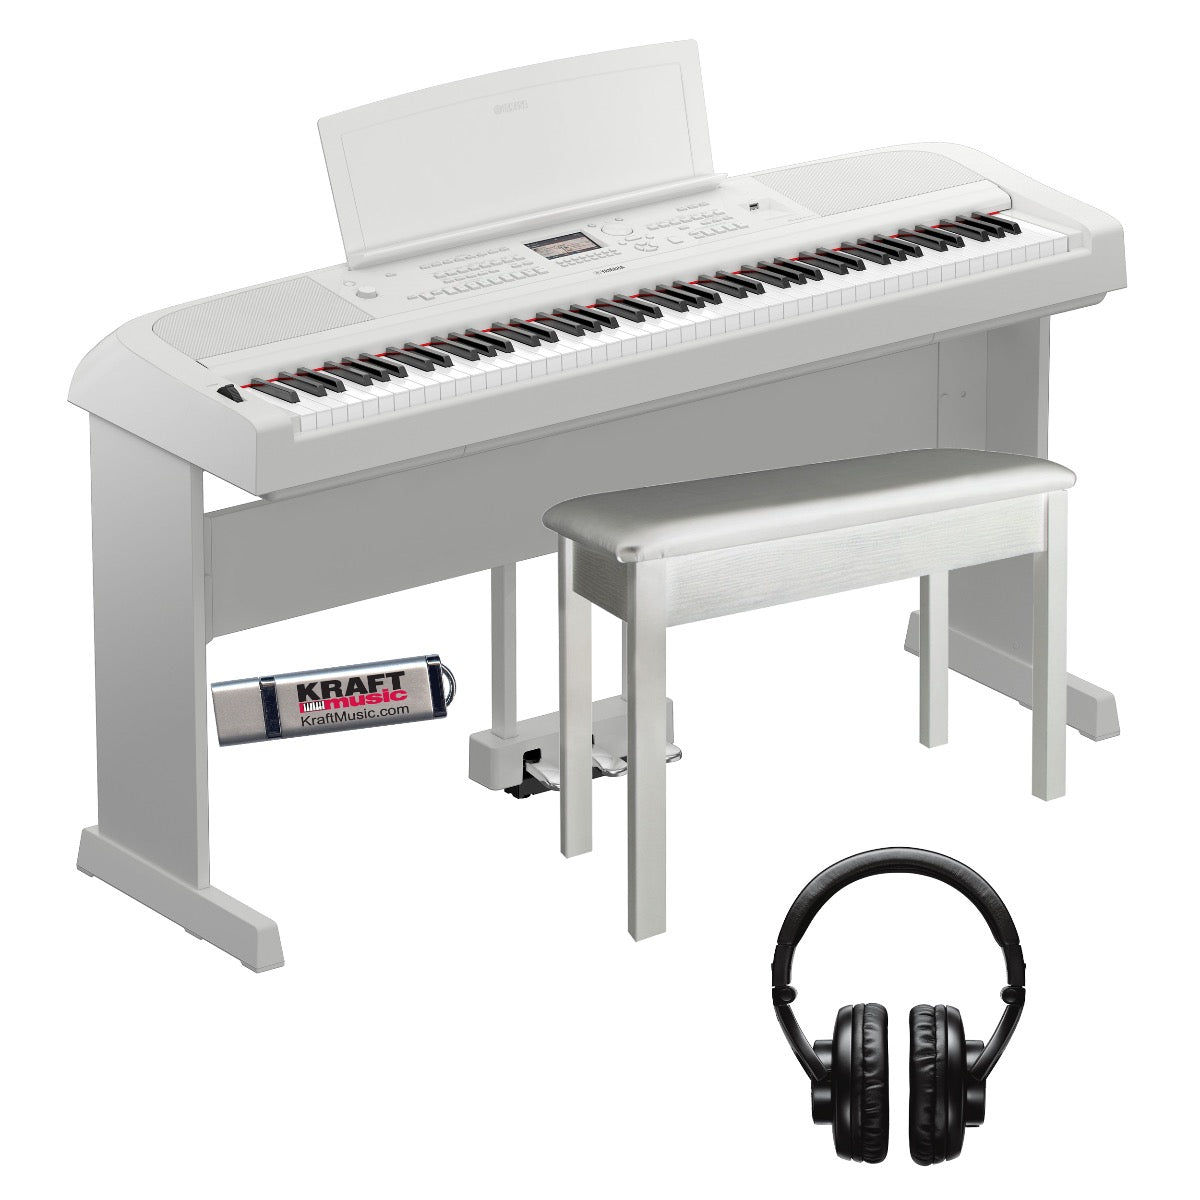 DGX-670 Portable Grand Digital Piano - White HOME BUND – Kraft